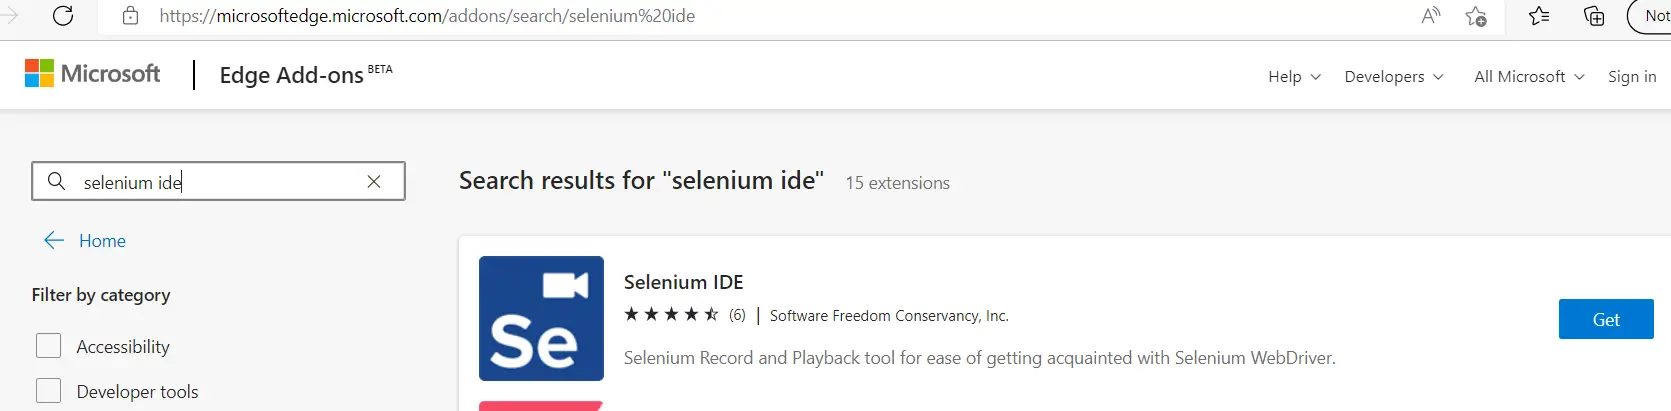 download the Selenium IDE plugin for Microsoft Edge